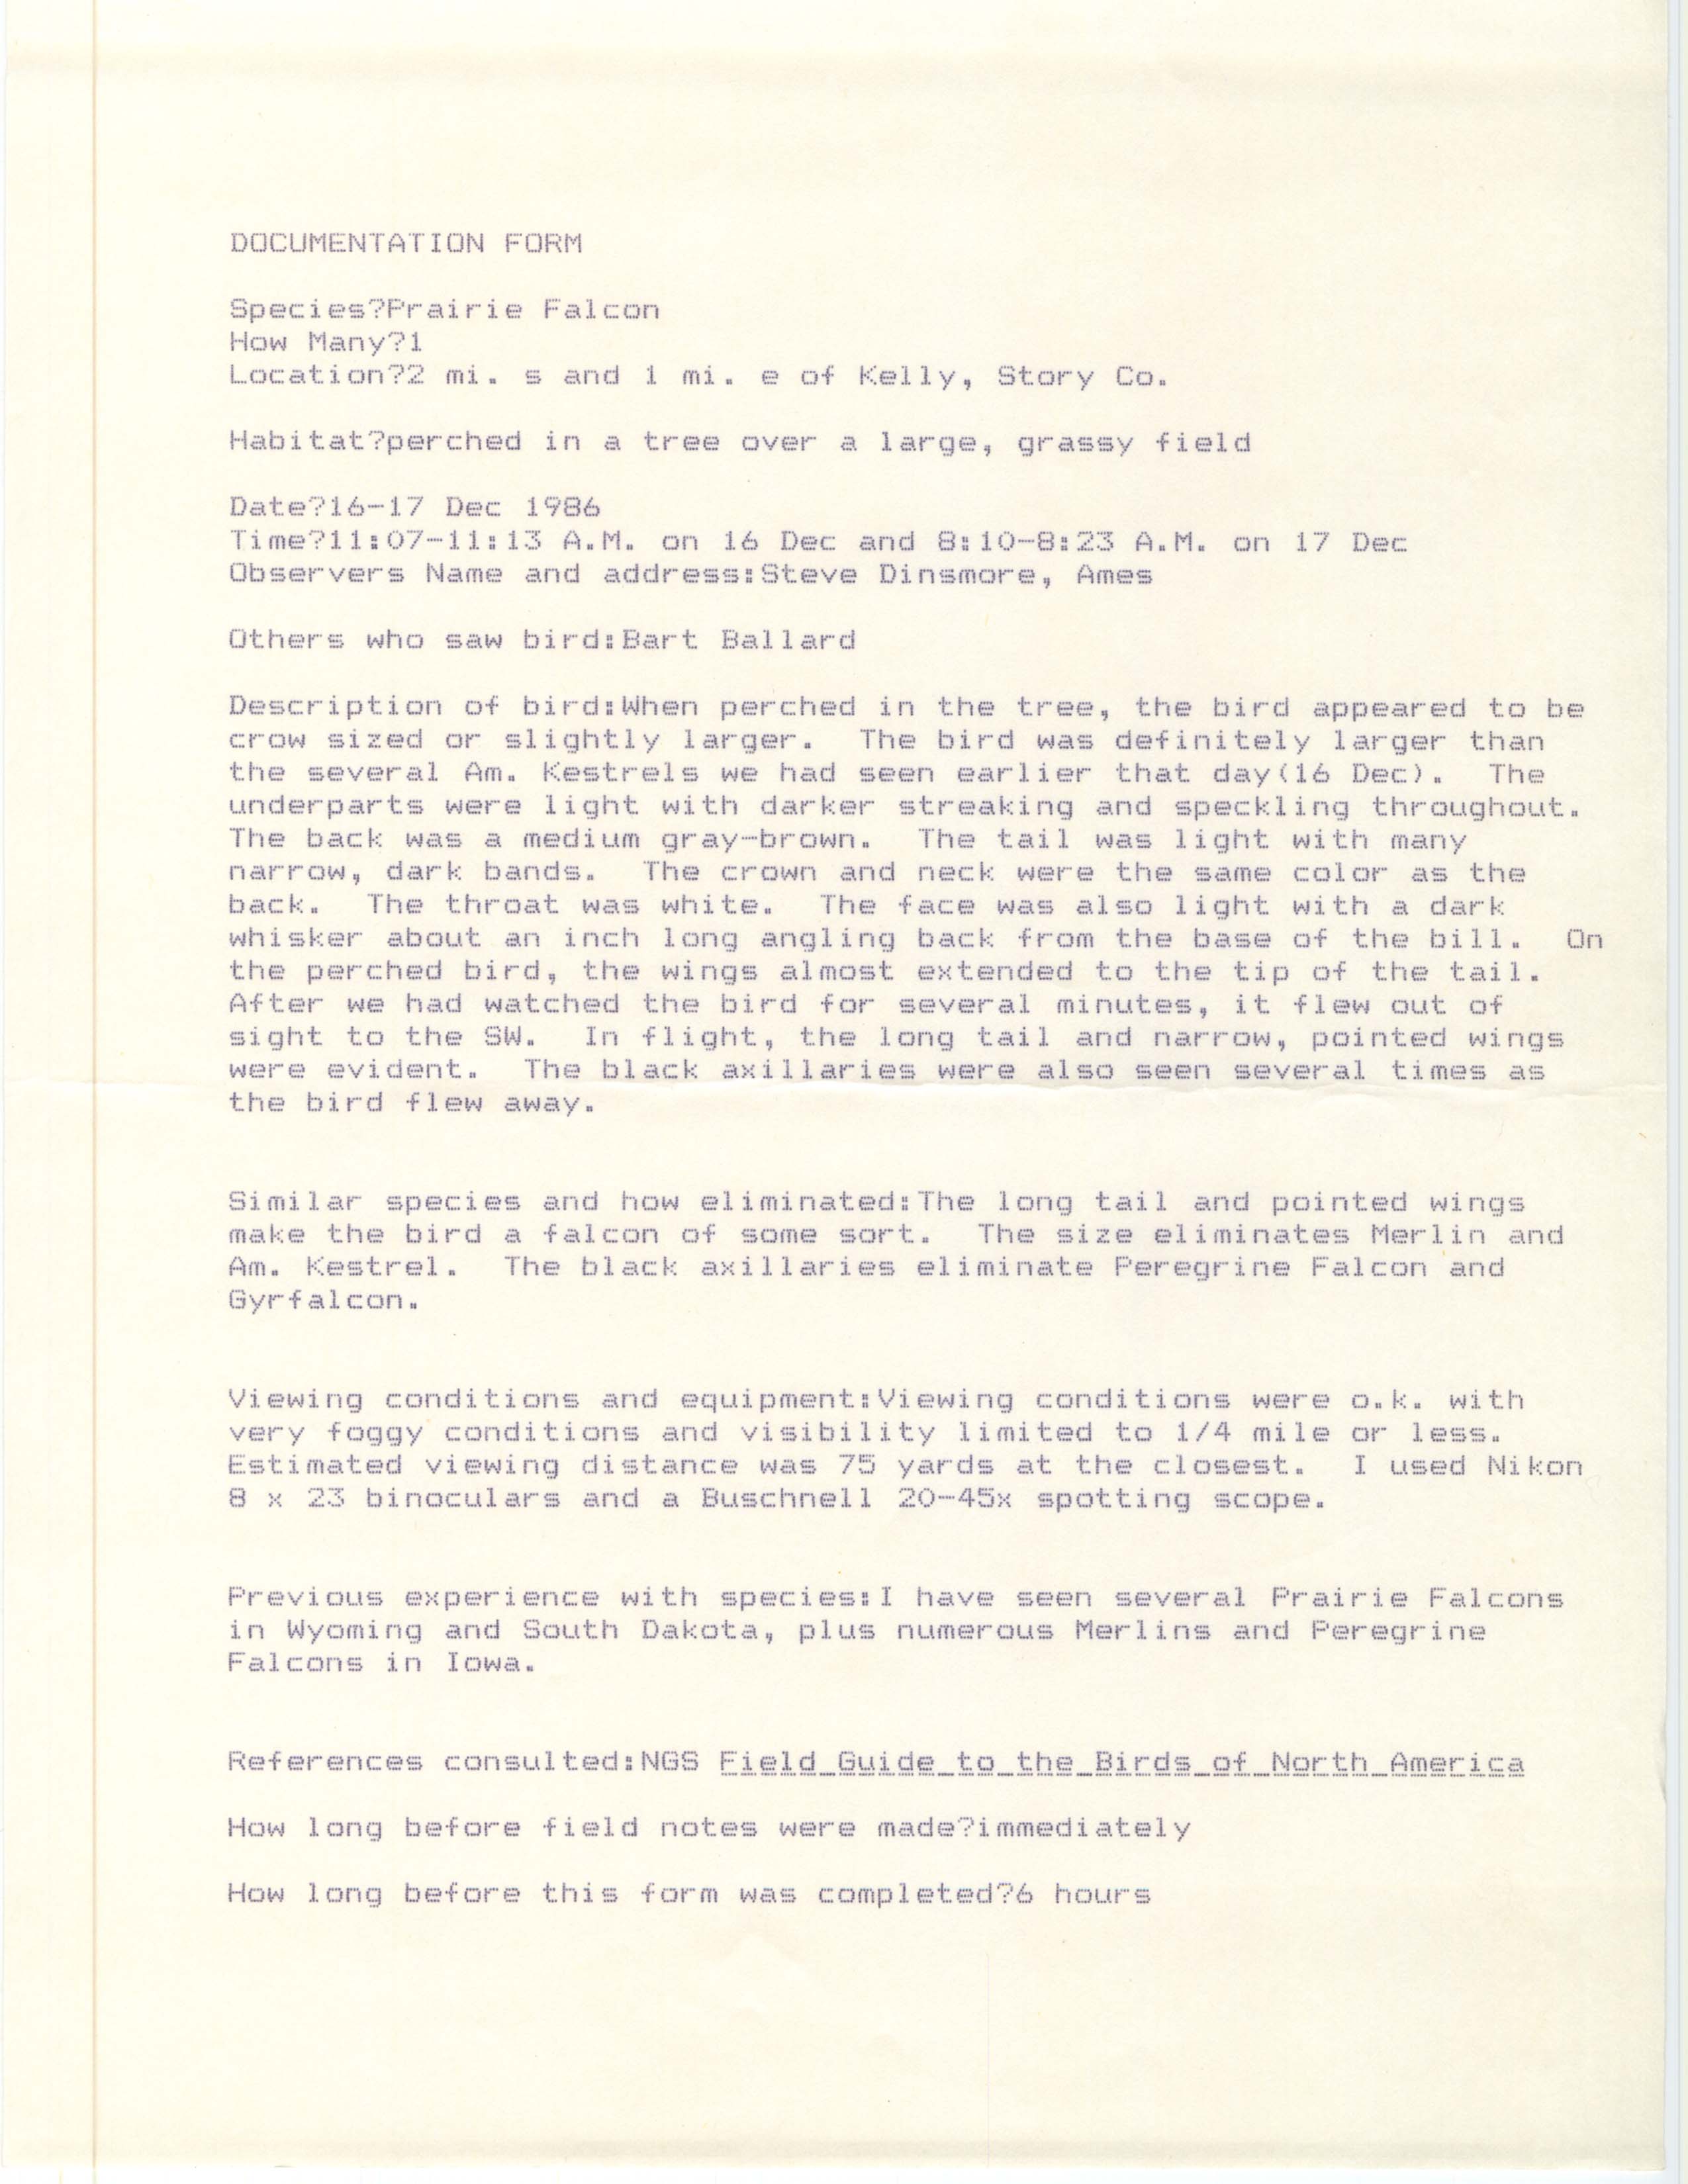 Rare bird documentation form for Prairie Falcon southeast of Kelley, 1986